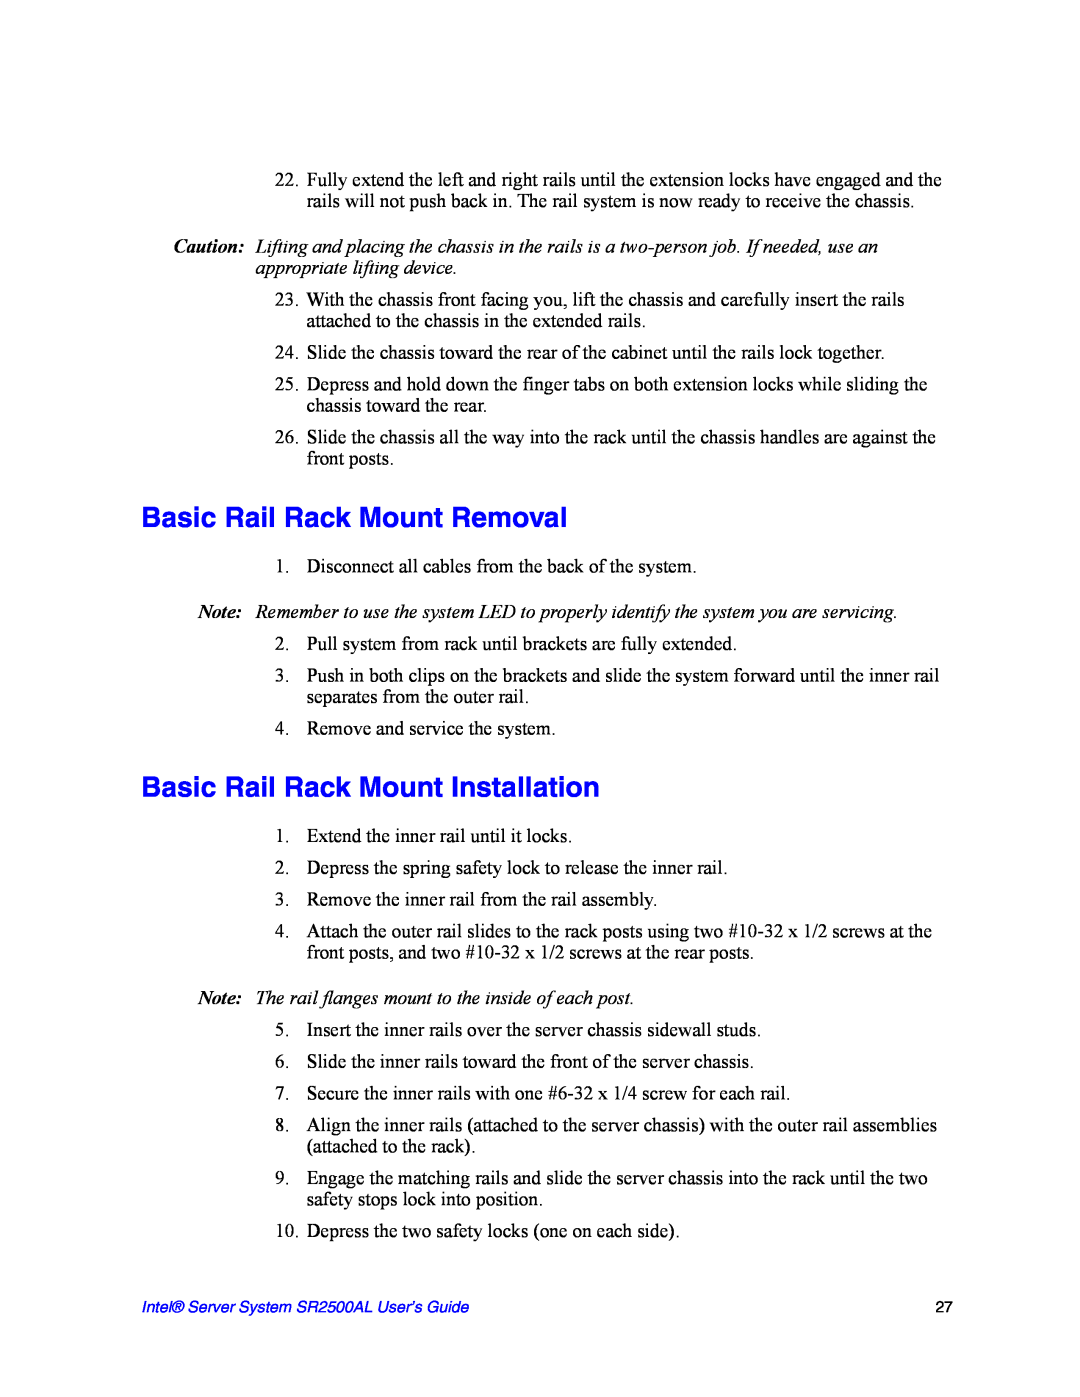 Intel SR2500AL manual Basic Rail Rack Mount Removal, Basic Rail Rack Mount Installation 